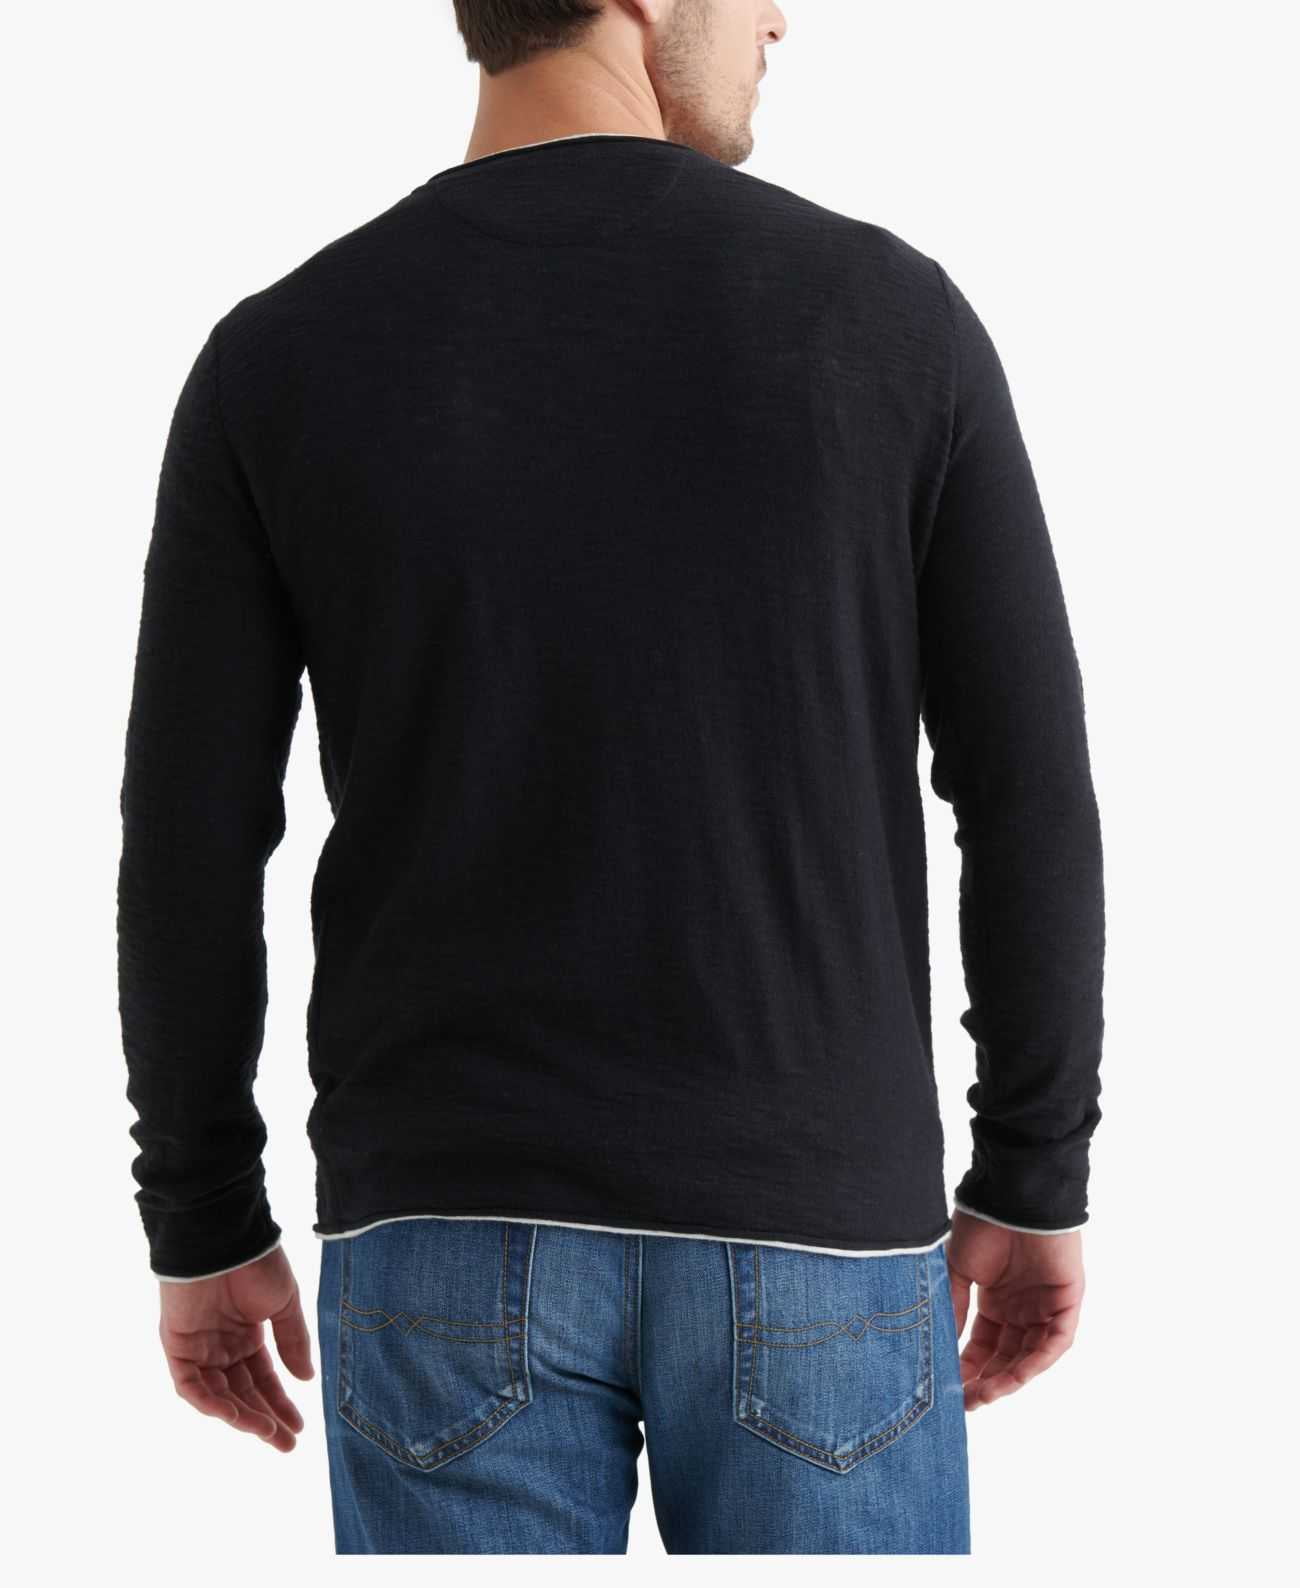 Lucky Brand Men's Textured V-Neck Sweater (Black, Small) 